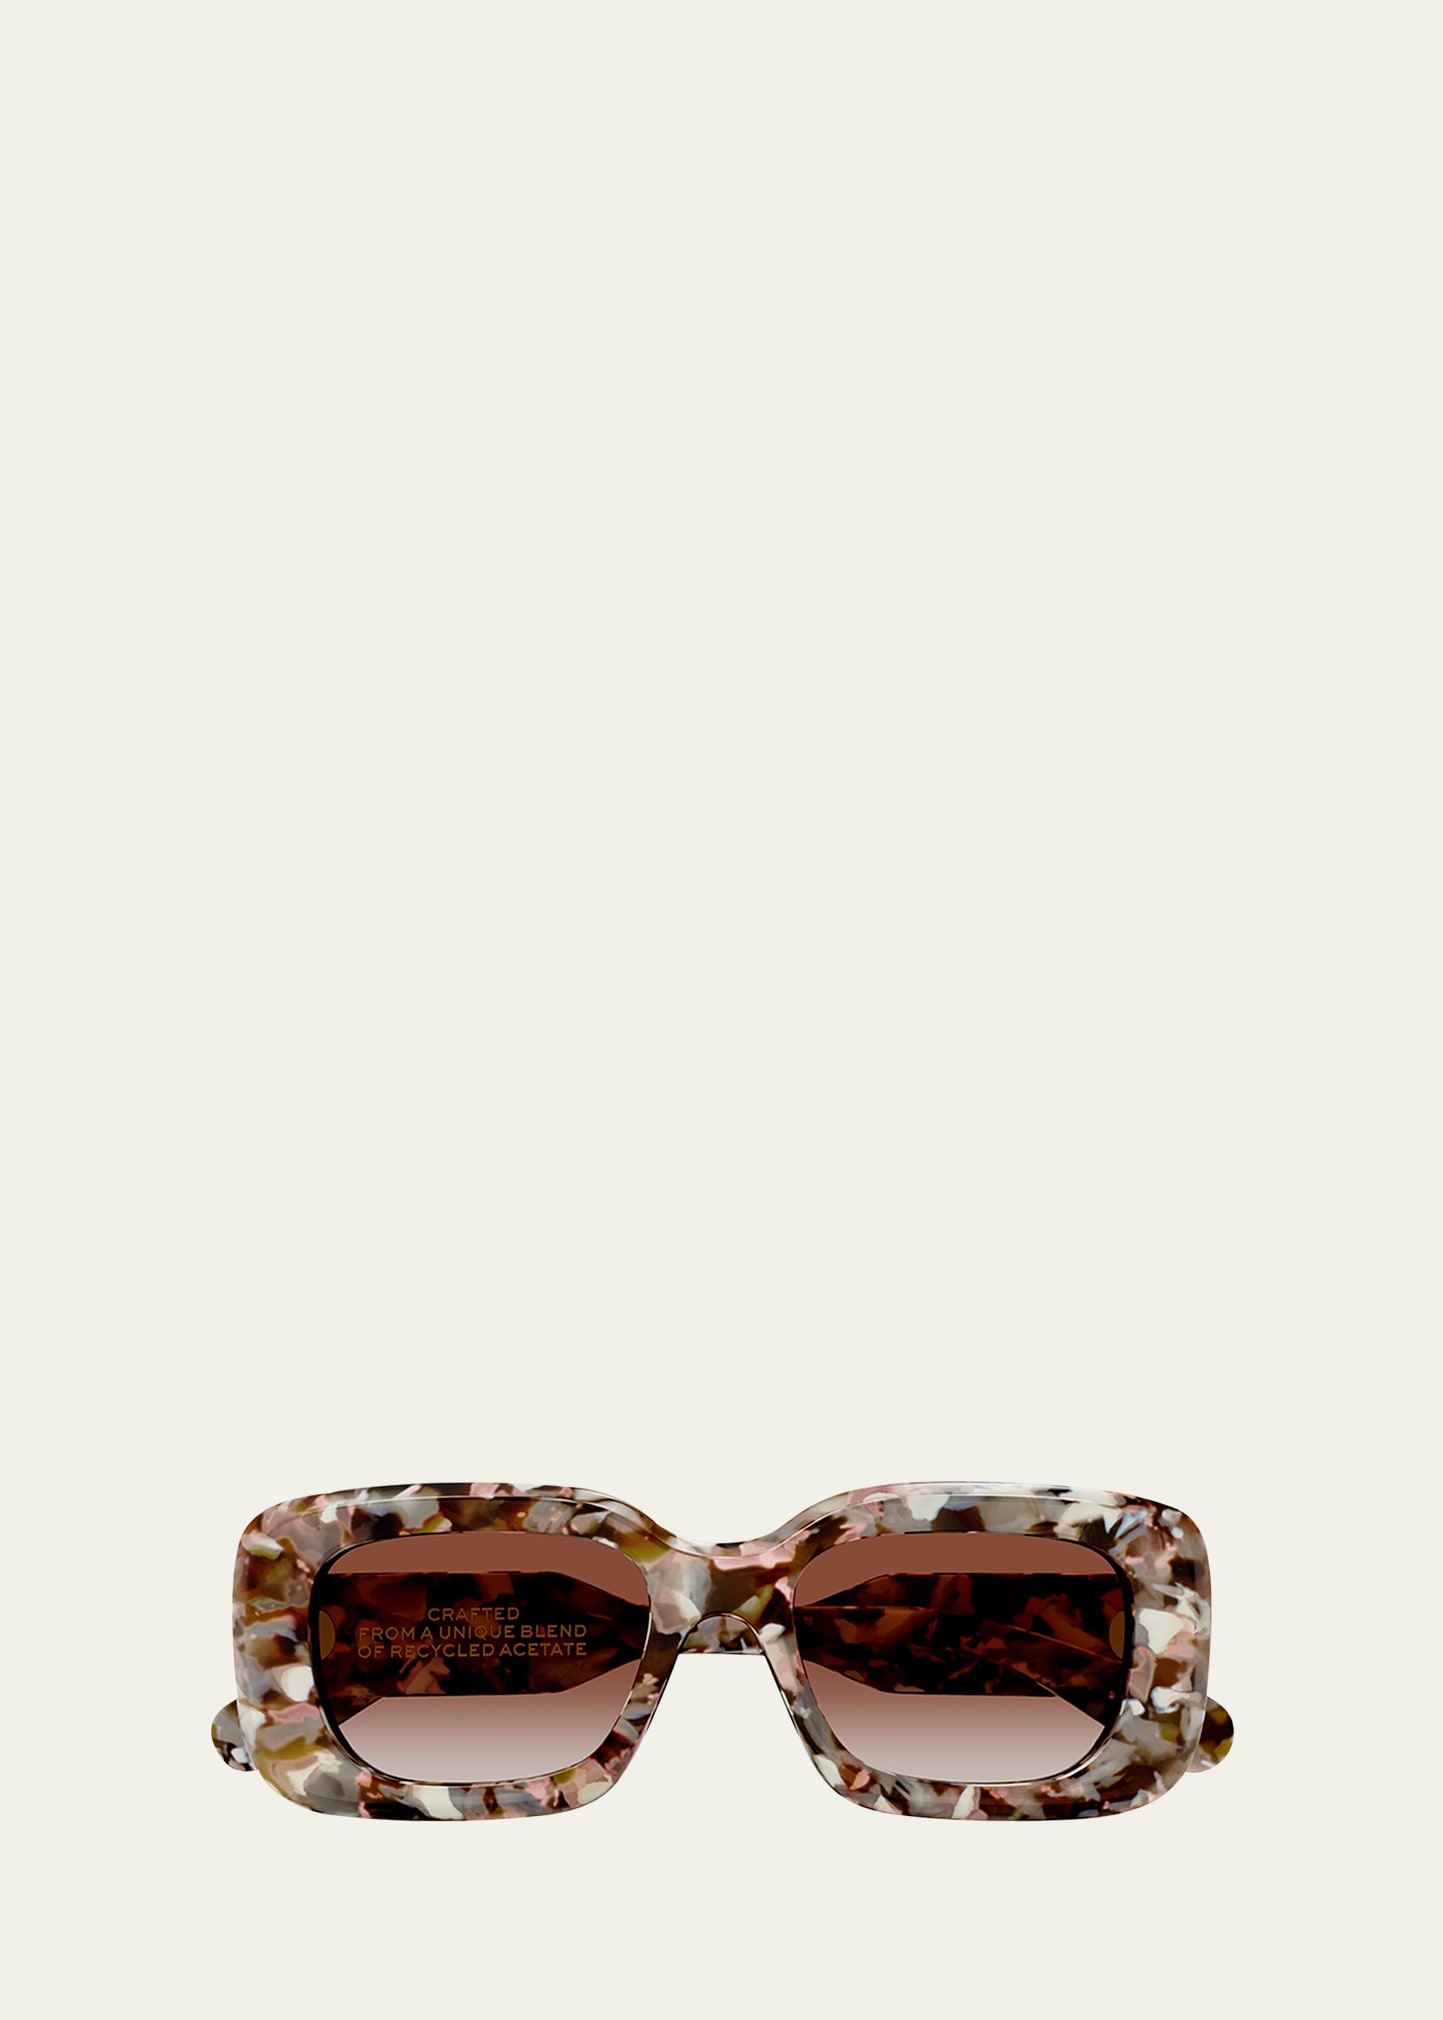 Chloé Acetate Rectangle Sunglasses In Brown